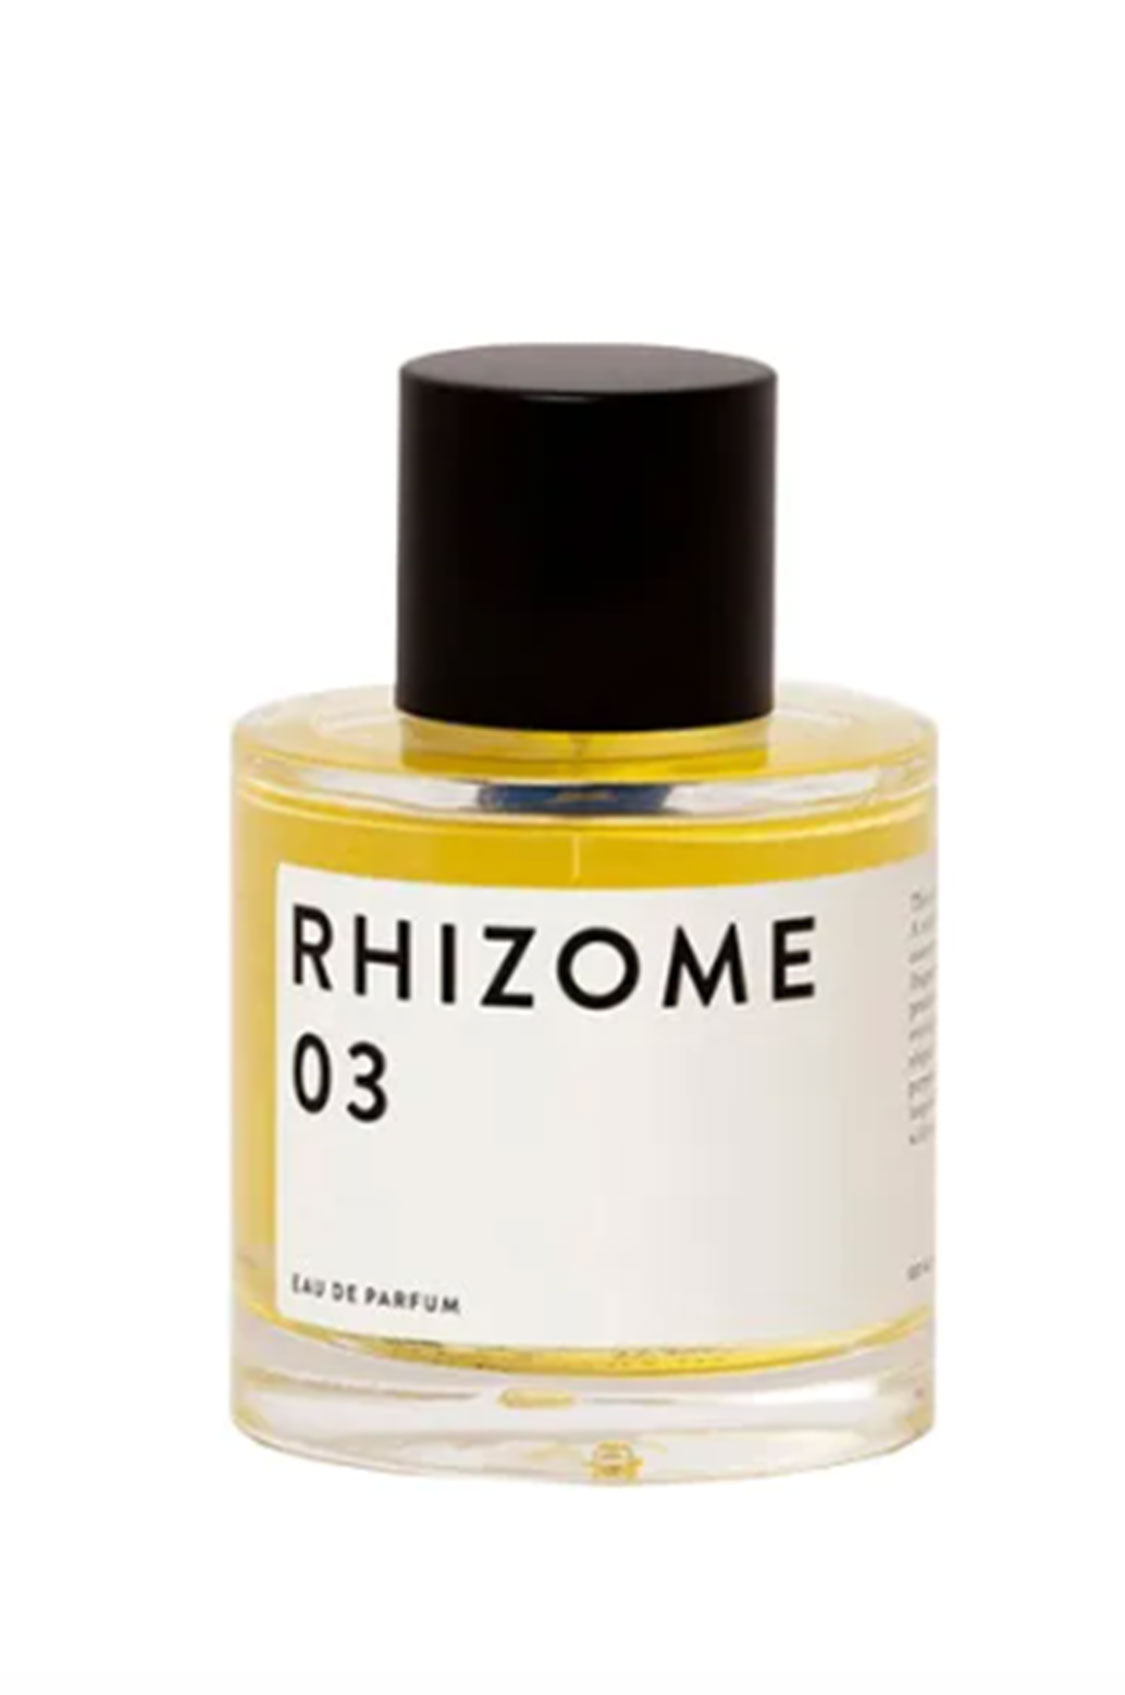 Rhizome 03